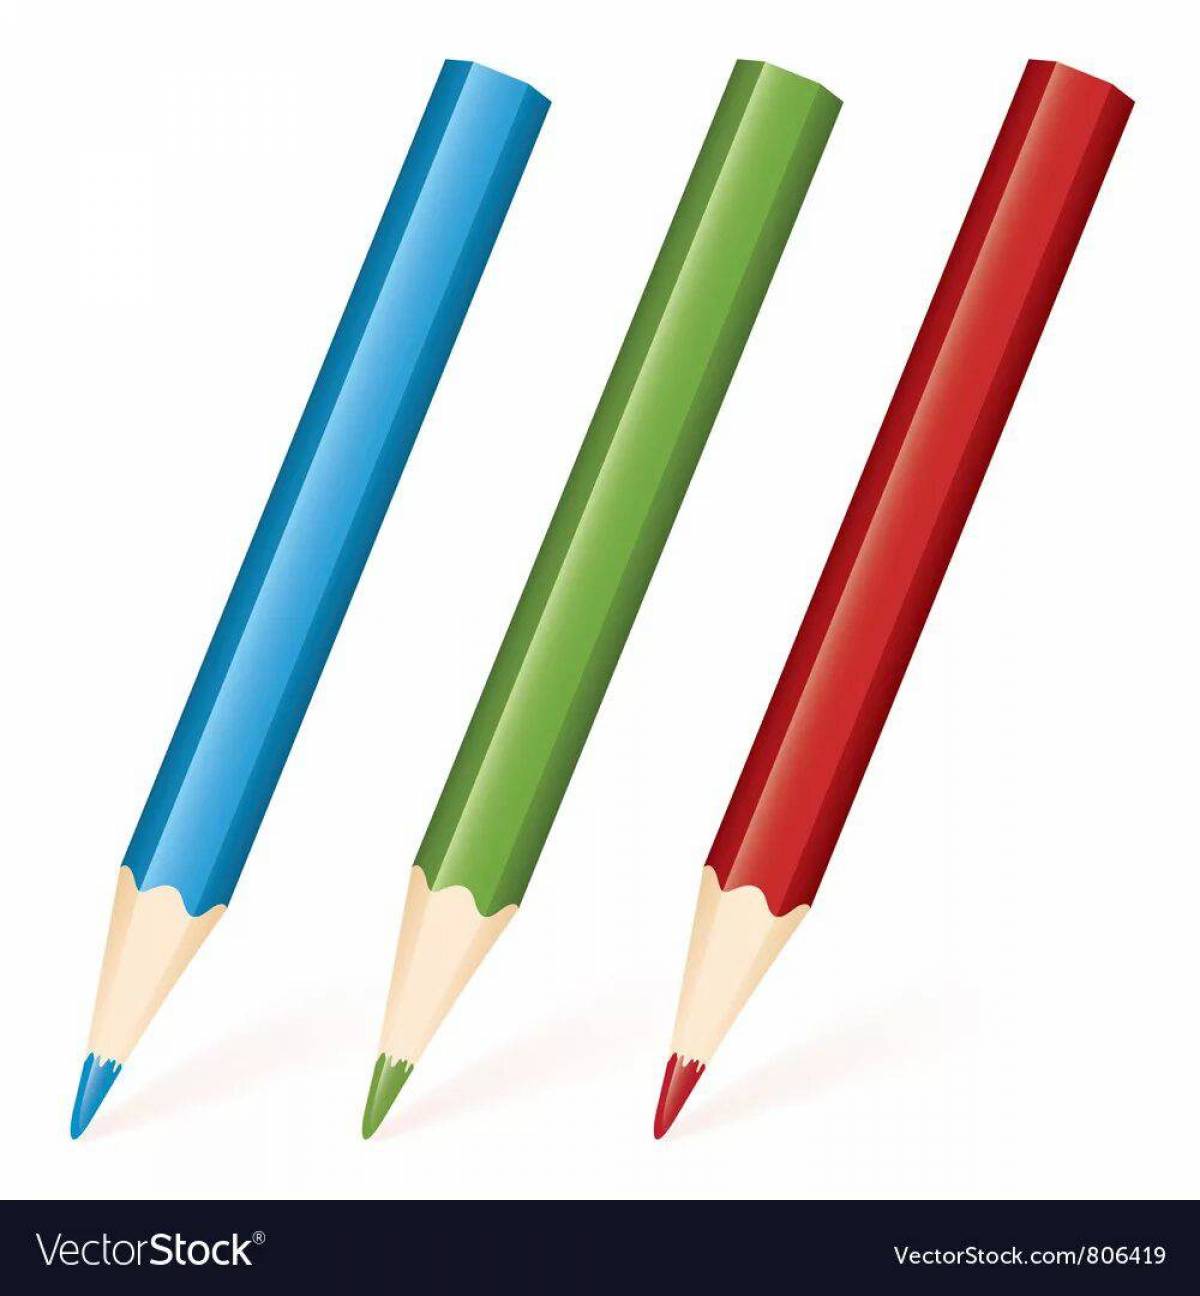 Два карандаша #11